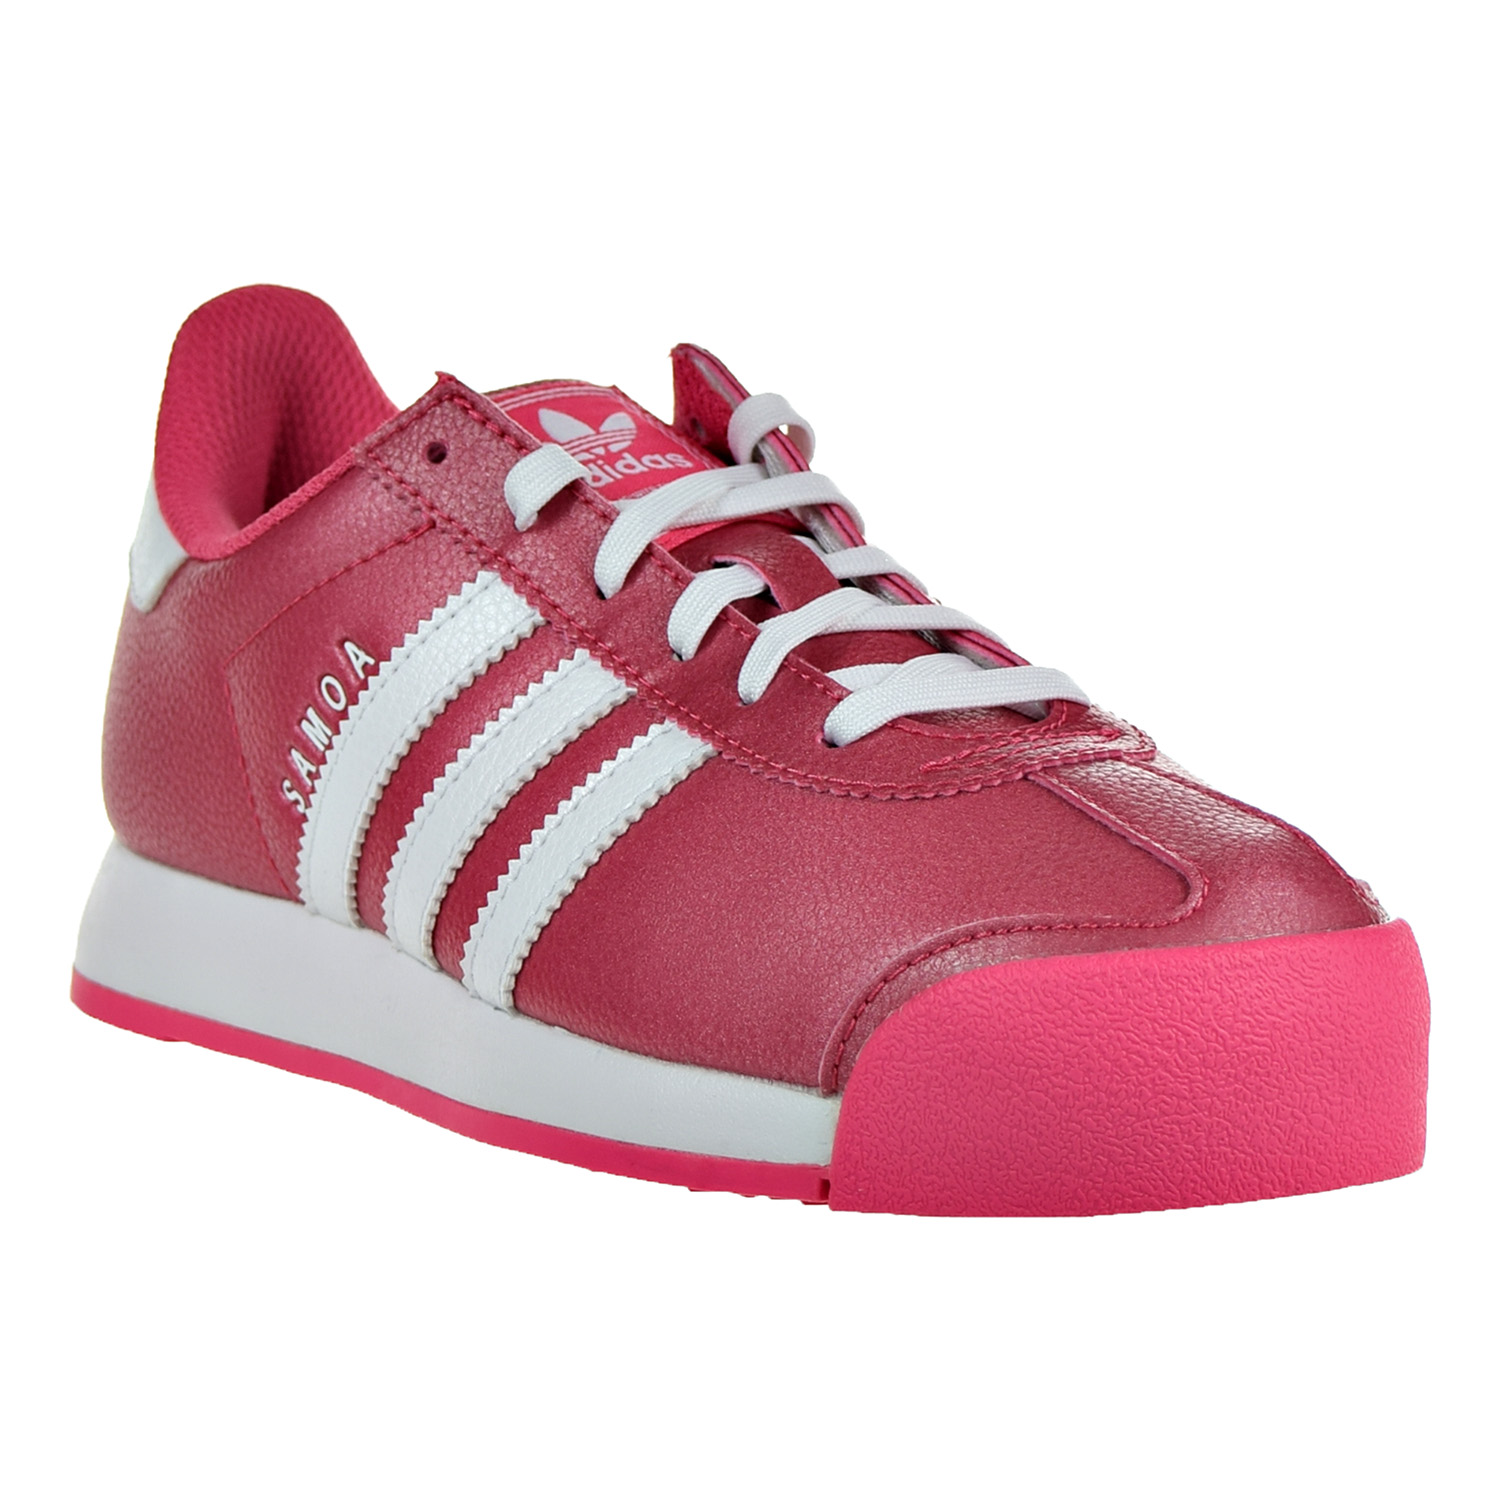 Adidas Samoa Big Kid's Shoes Pink-White b38963 | eBay